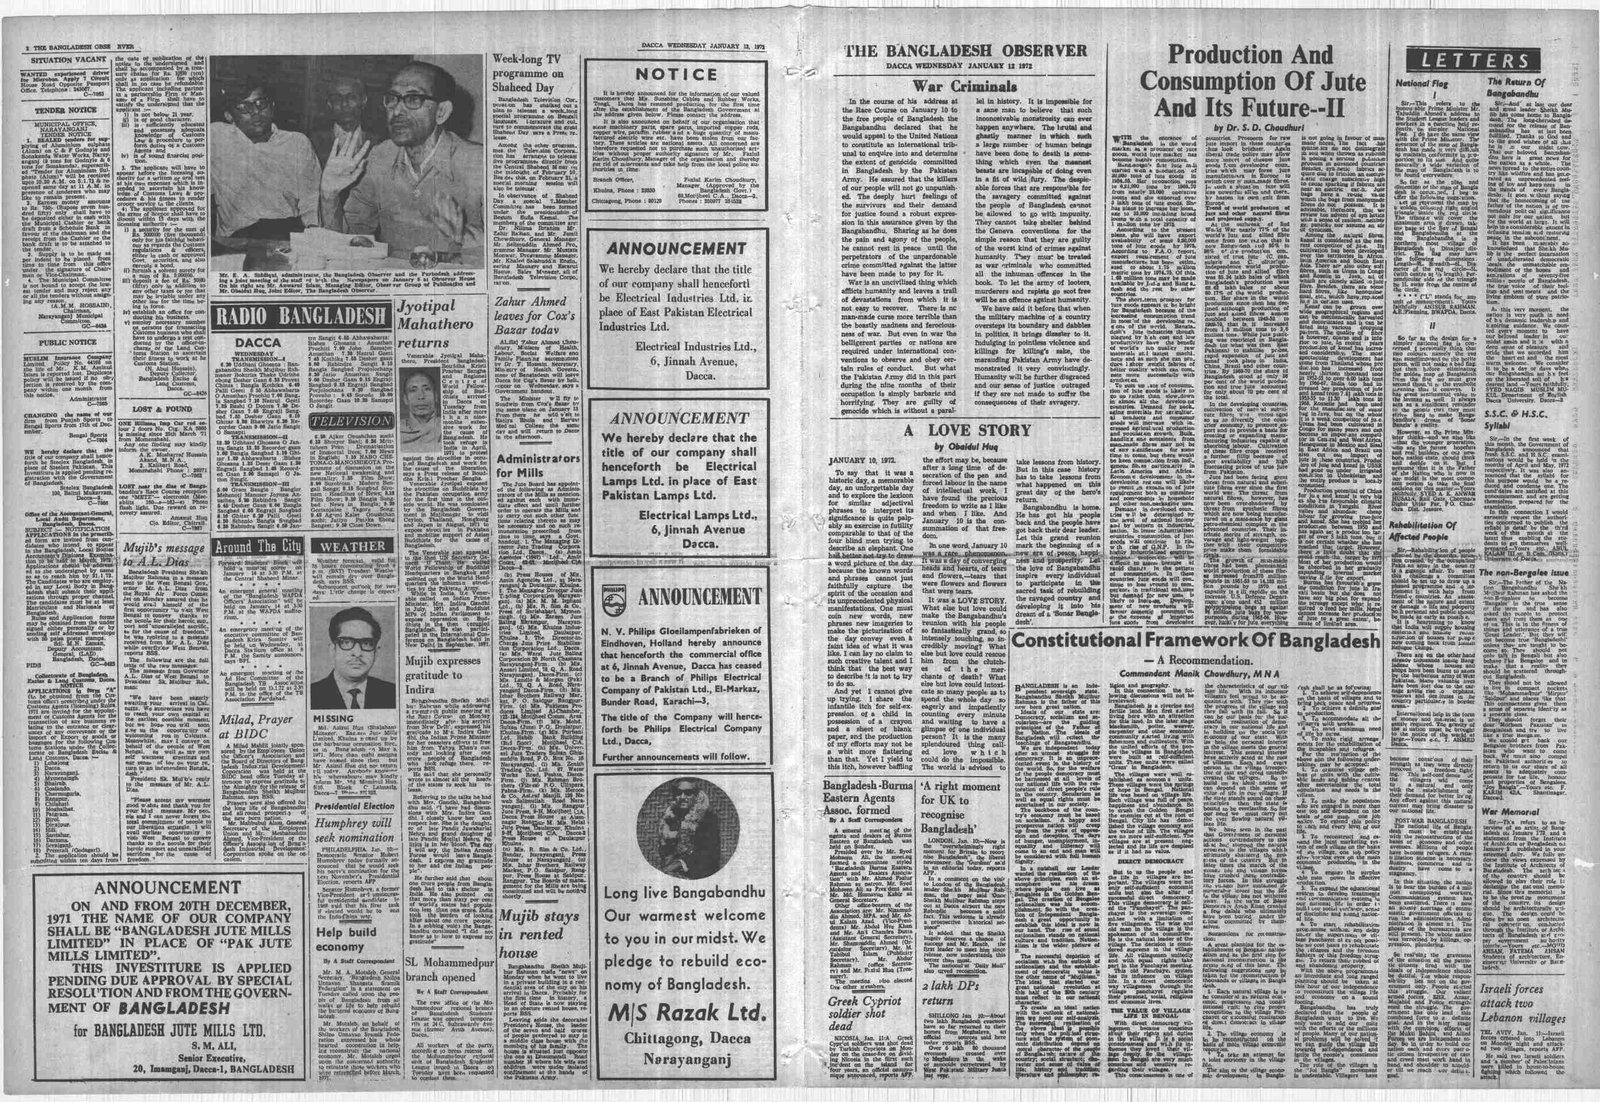 12JAN1972-Bangladesh Observer-Regular-Page 2 and 3